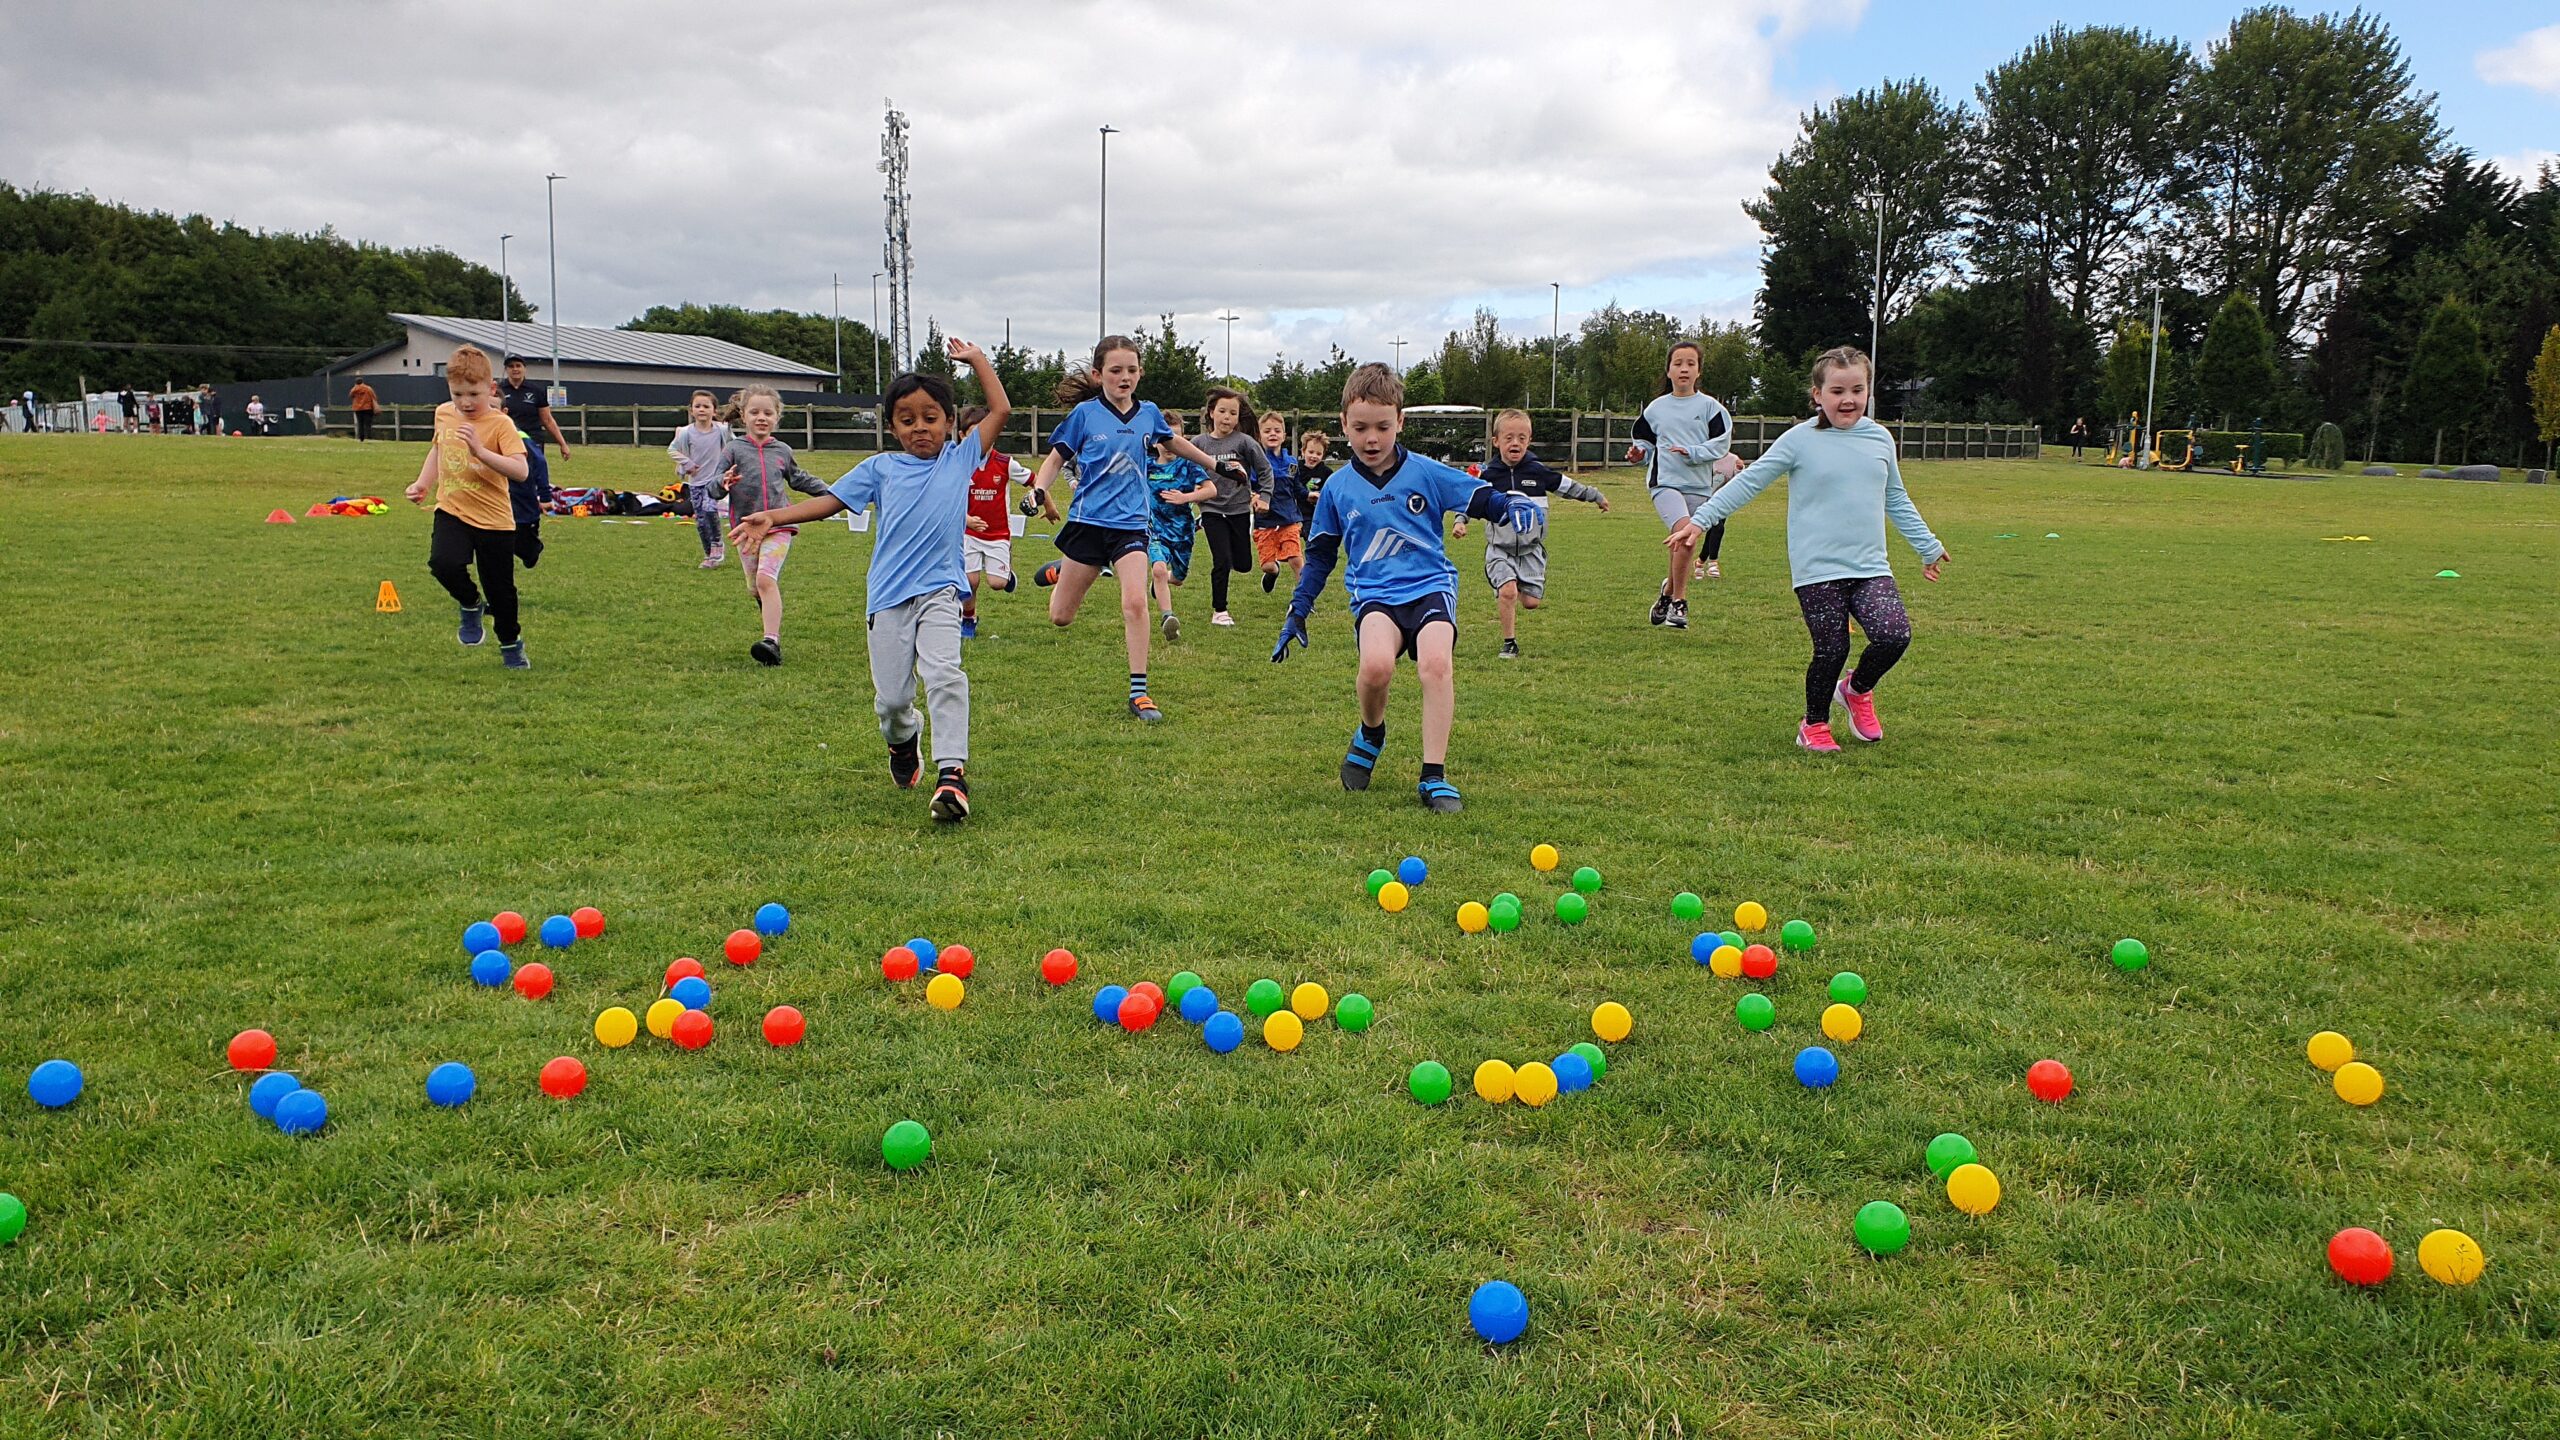 Children running towards balls on grass